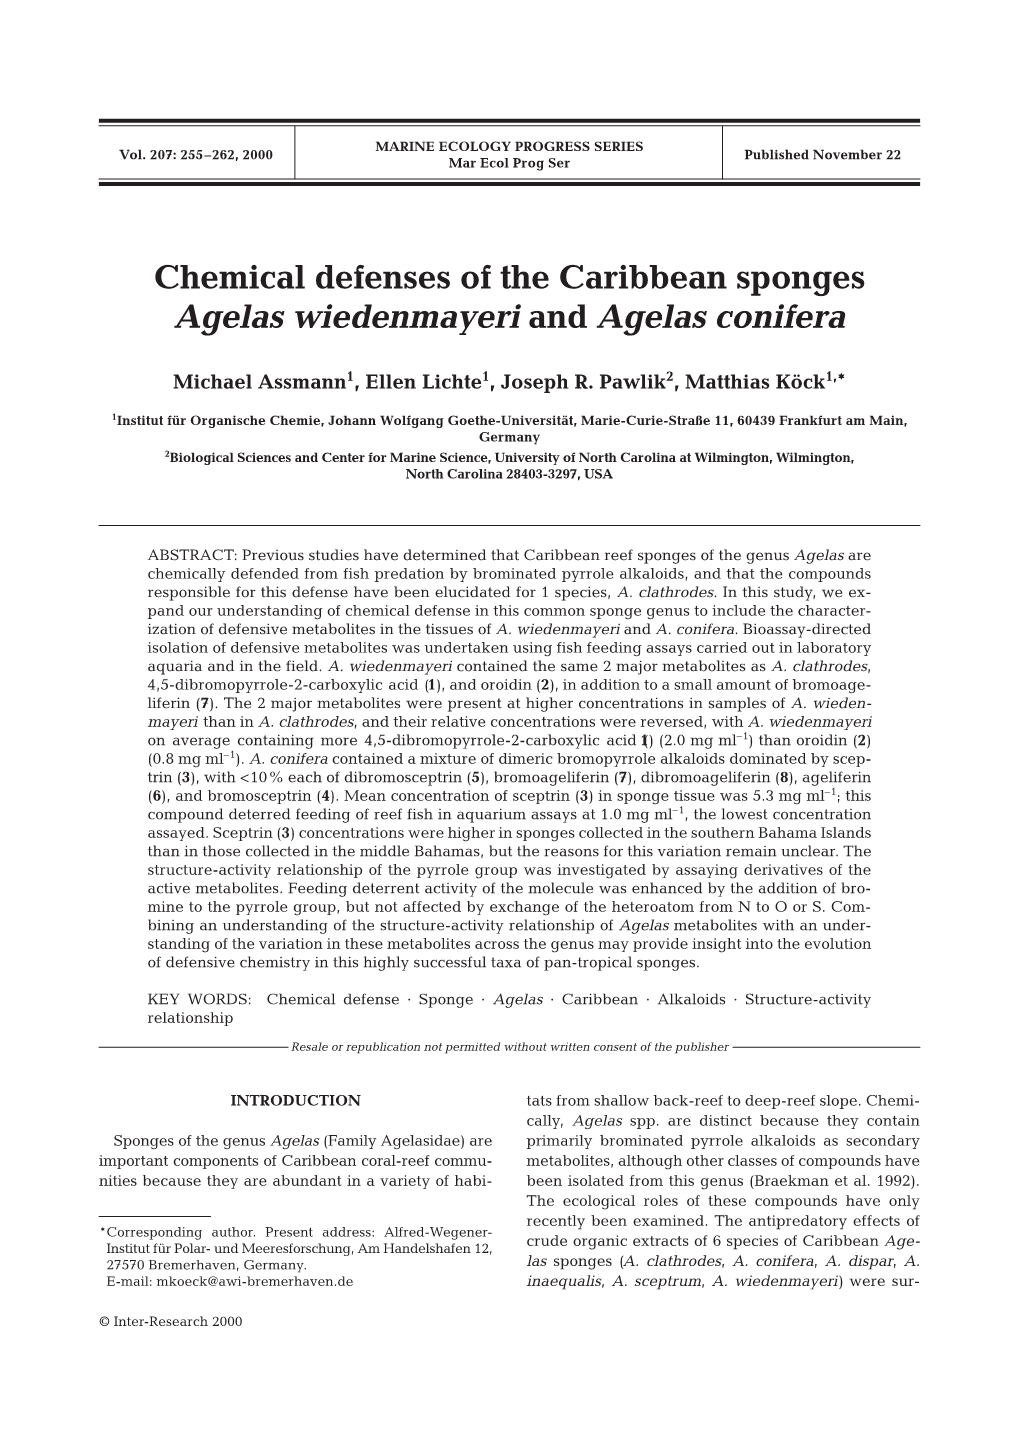 Chemical Defenses of the Caribbean Sponges Agelas Wiedenmayeri and Agelas Conifera